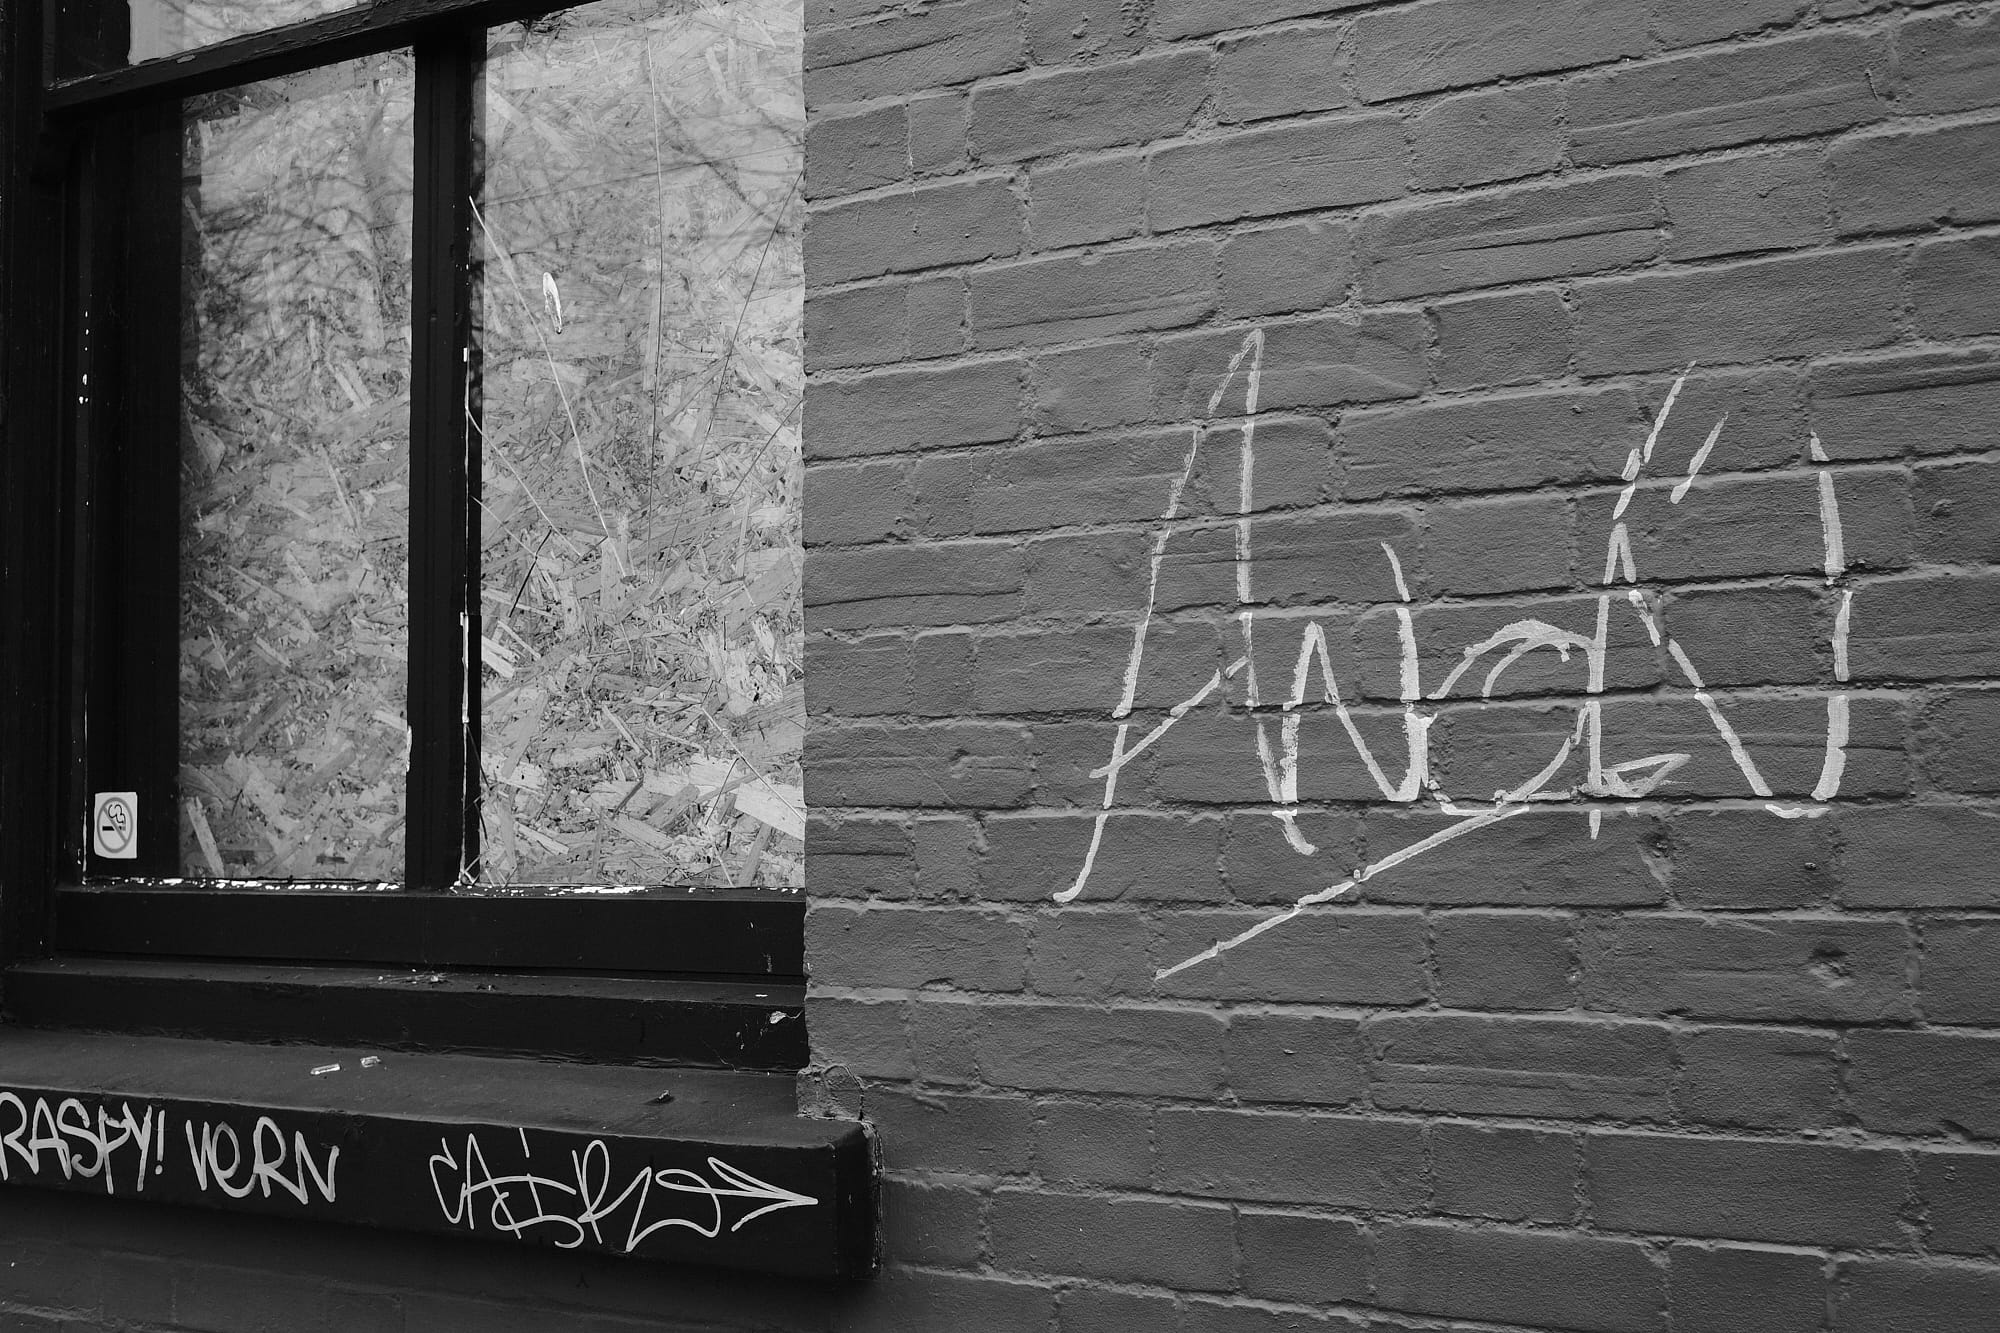 boarded-up broken window and 'Anon' graffiti